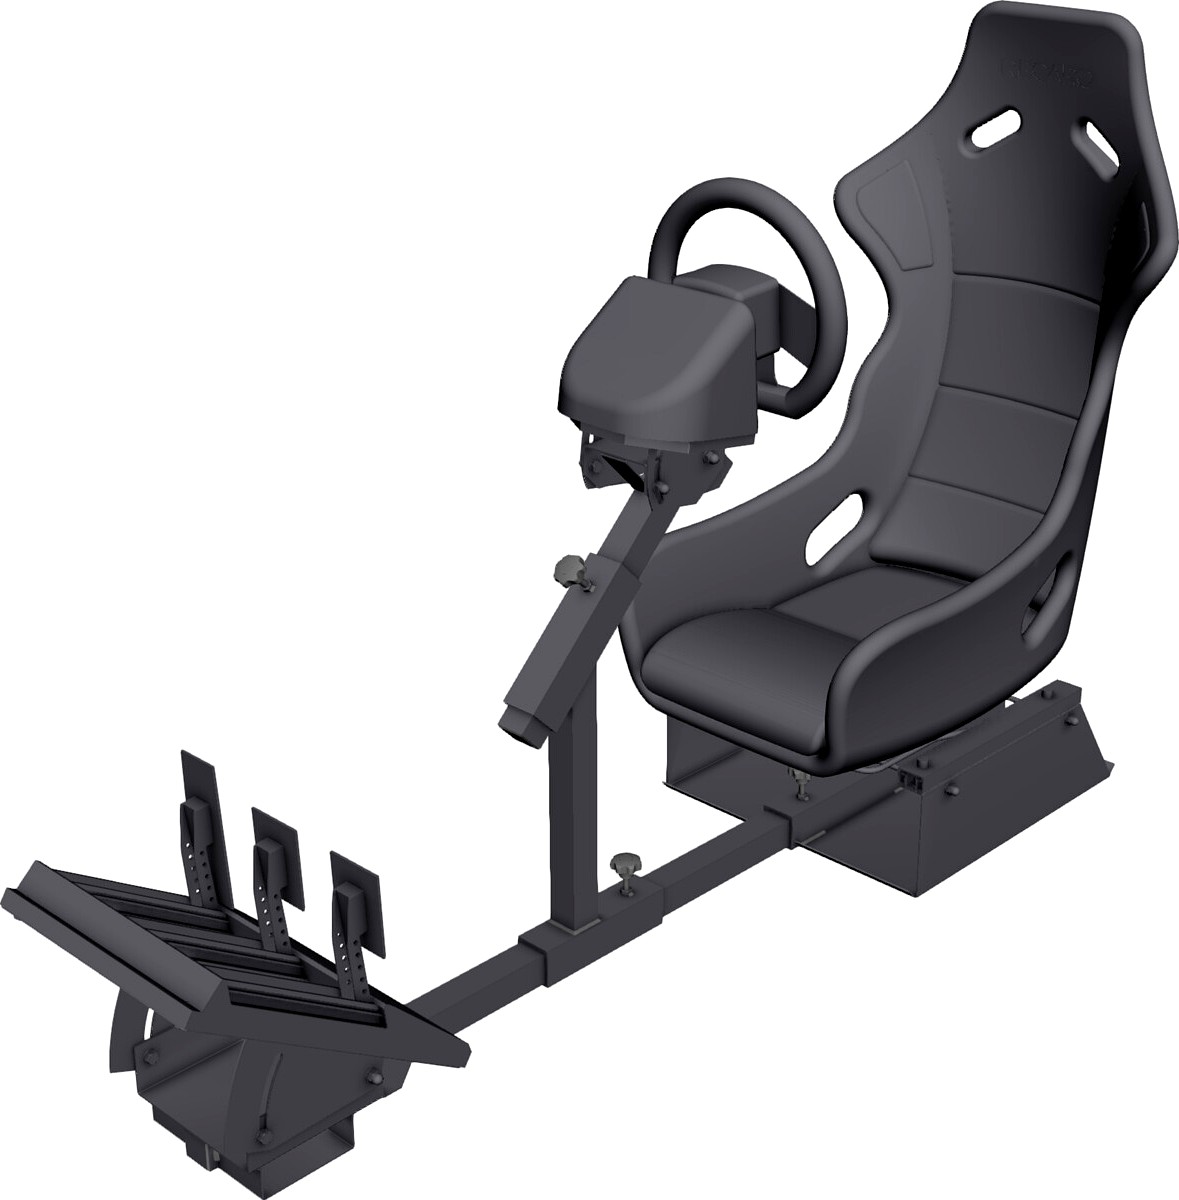 Gamer Race Seat 3D CAD Model